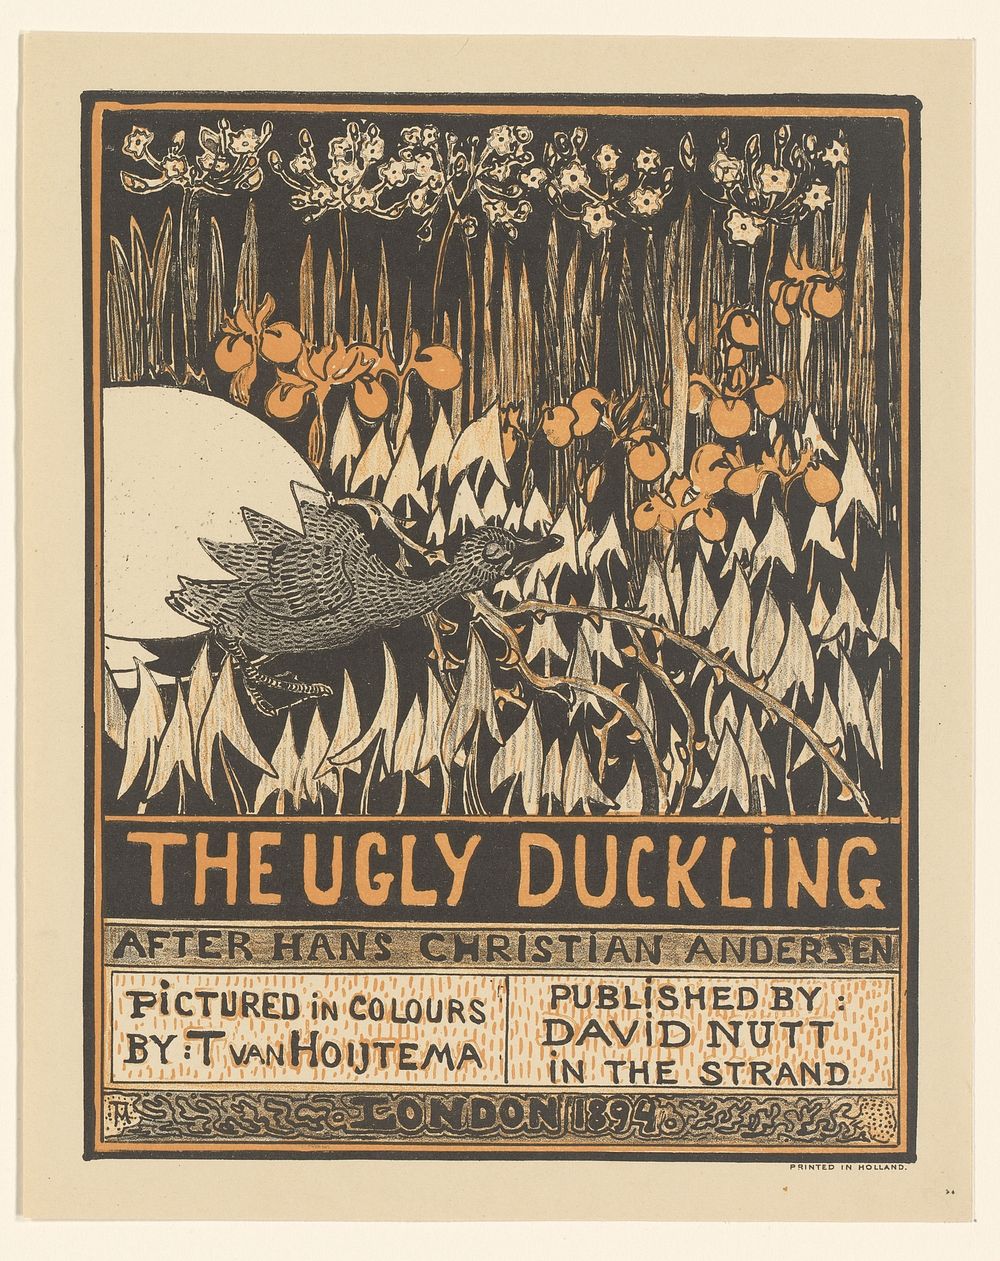 Omslag voor: Theo van Hoytema, The ugly duckling, 1894 (1894) by Theo van Hoytema and David Nutt